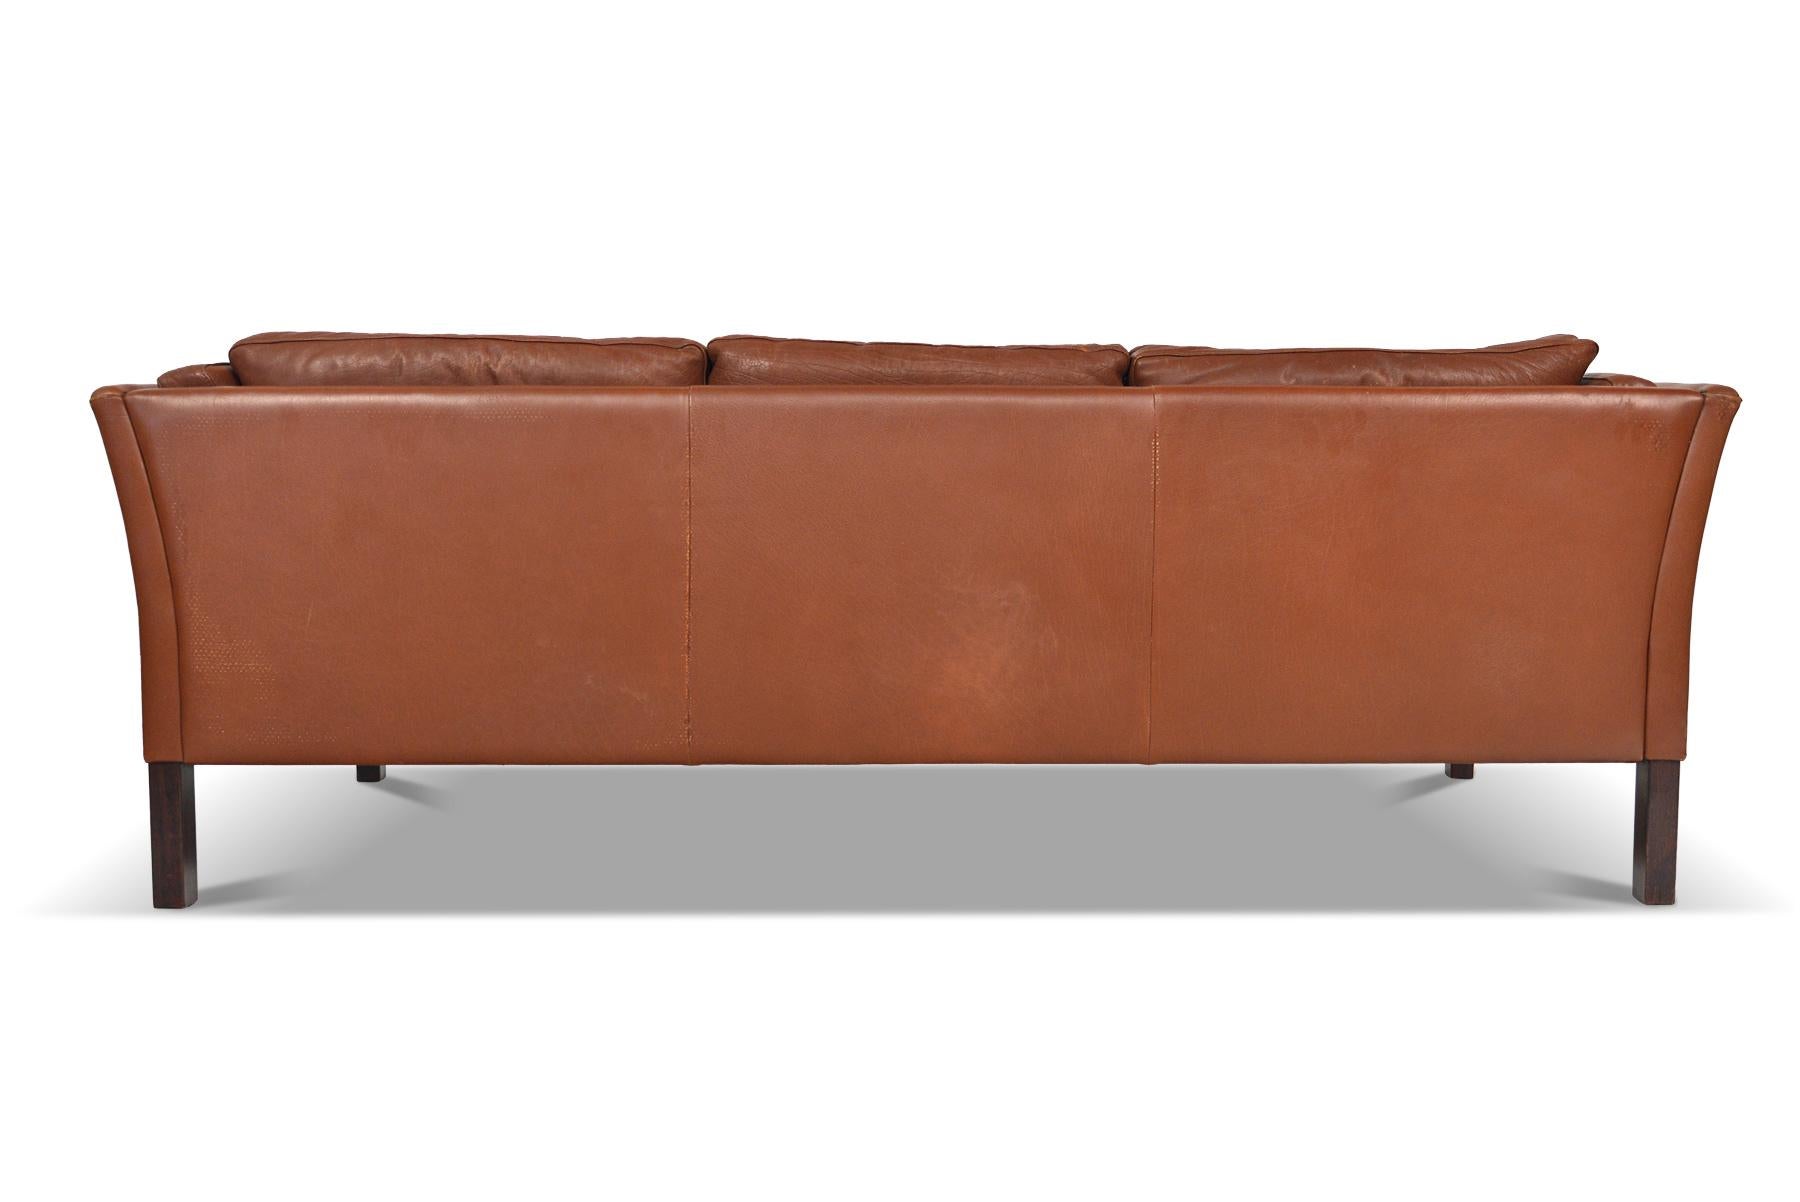 20th Century Danish Modern Patinated Rust Toned Leather Three-Seat Leather Sofa